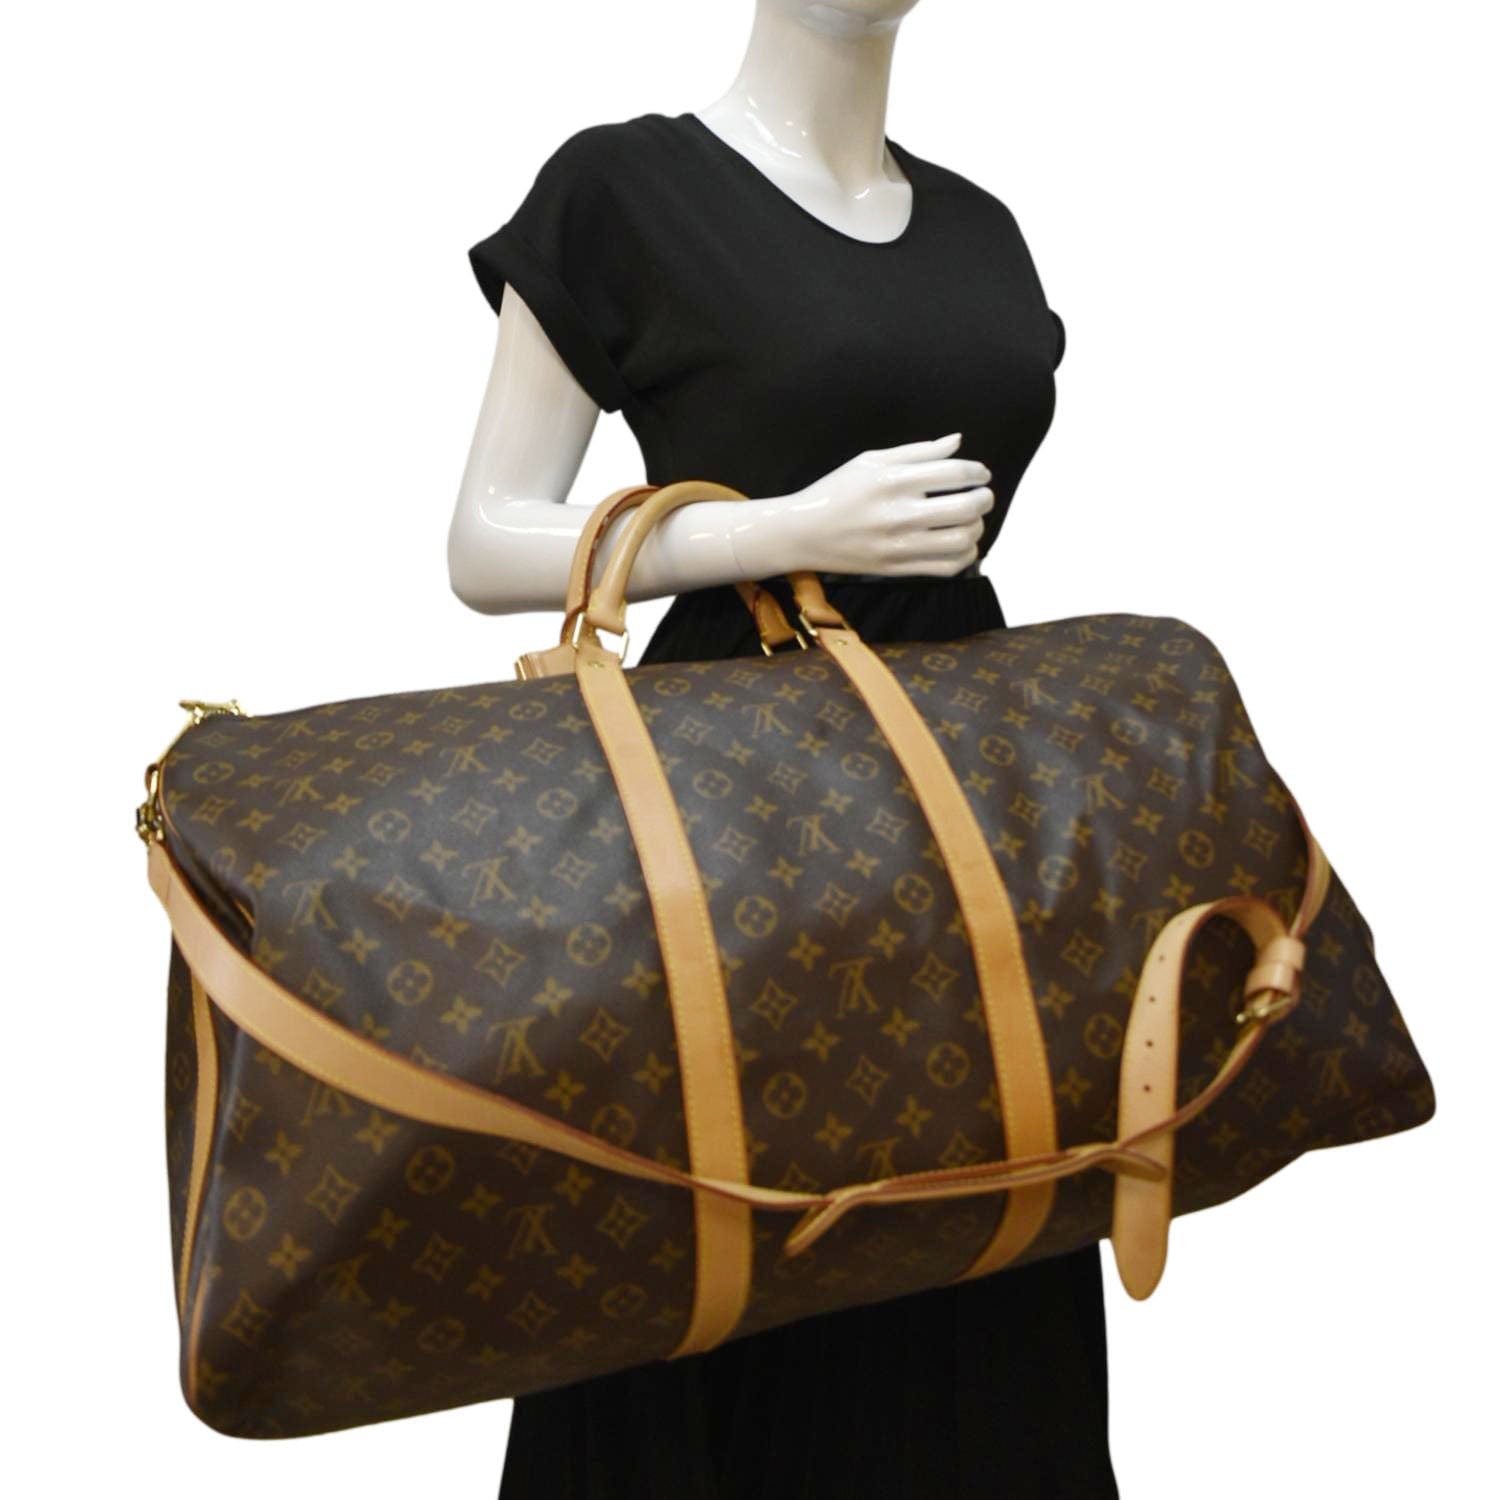 Louis Vuitton, Louis Vuitton Keepall Travel Bag 60 In monogram